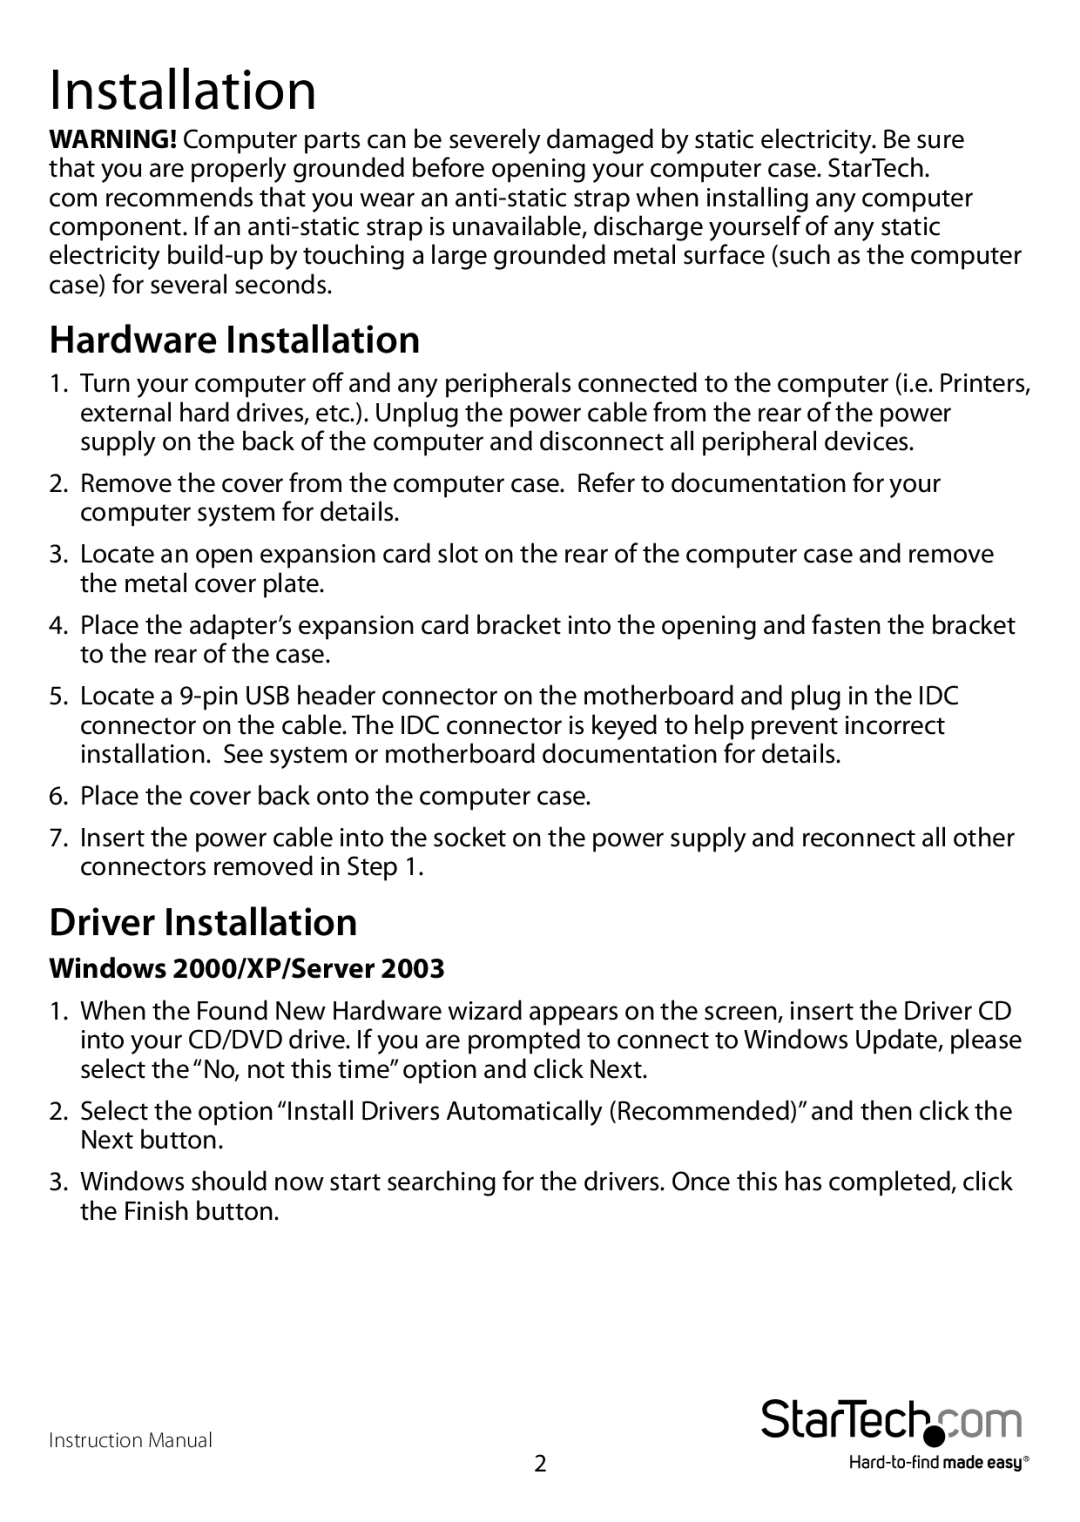 StarTech.com startech manual Hardware Installation, Driver Installation, Windows 2000/XP/Server 